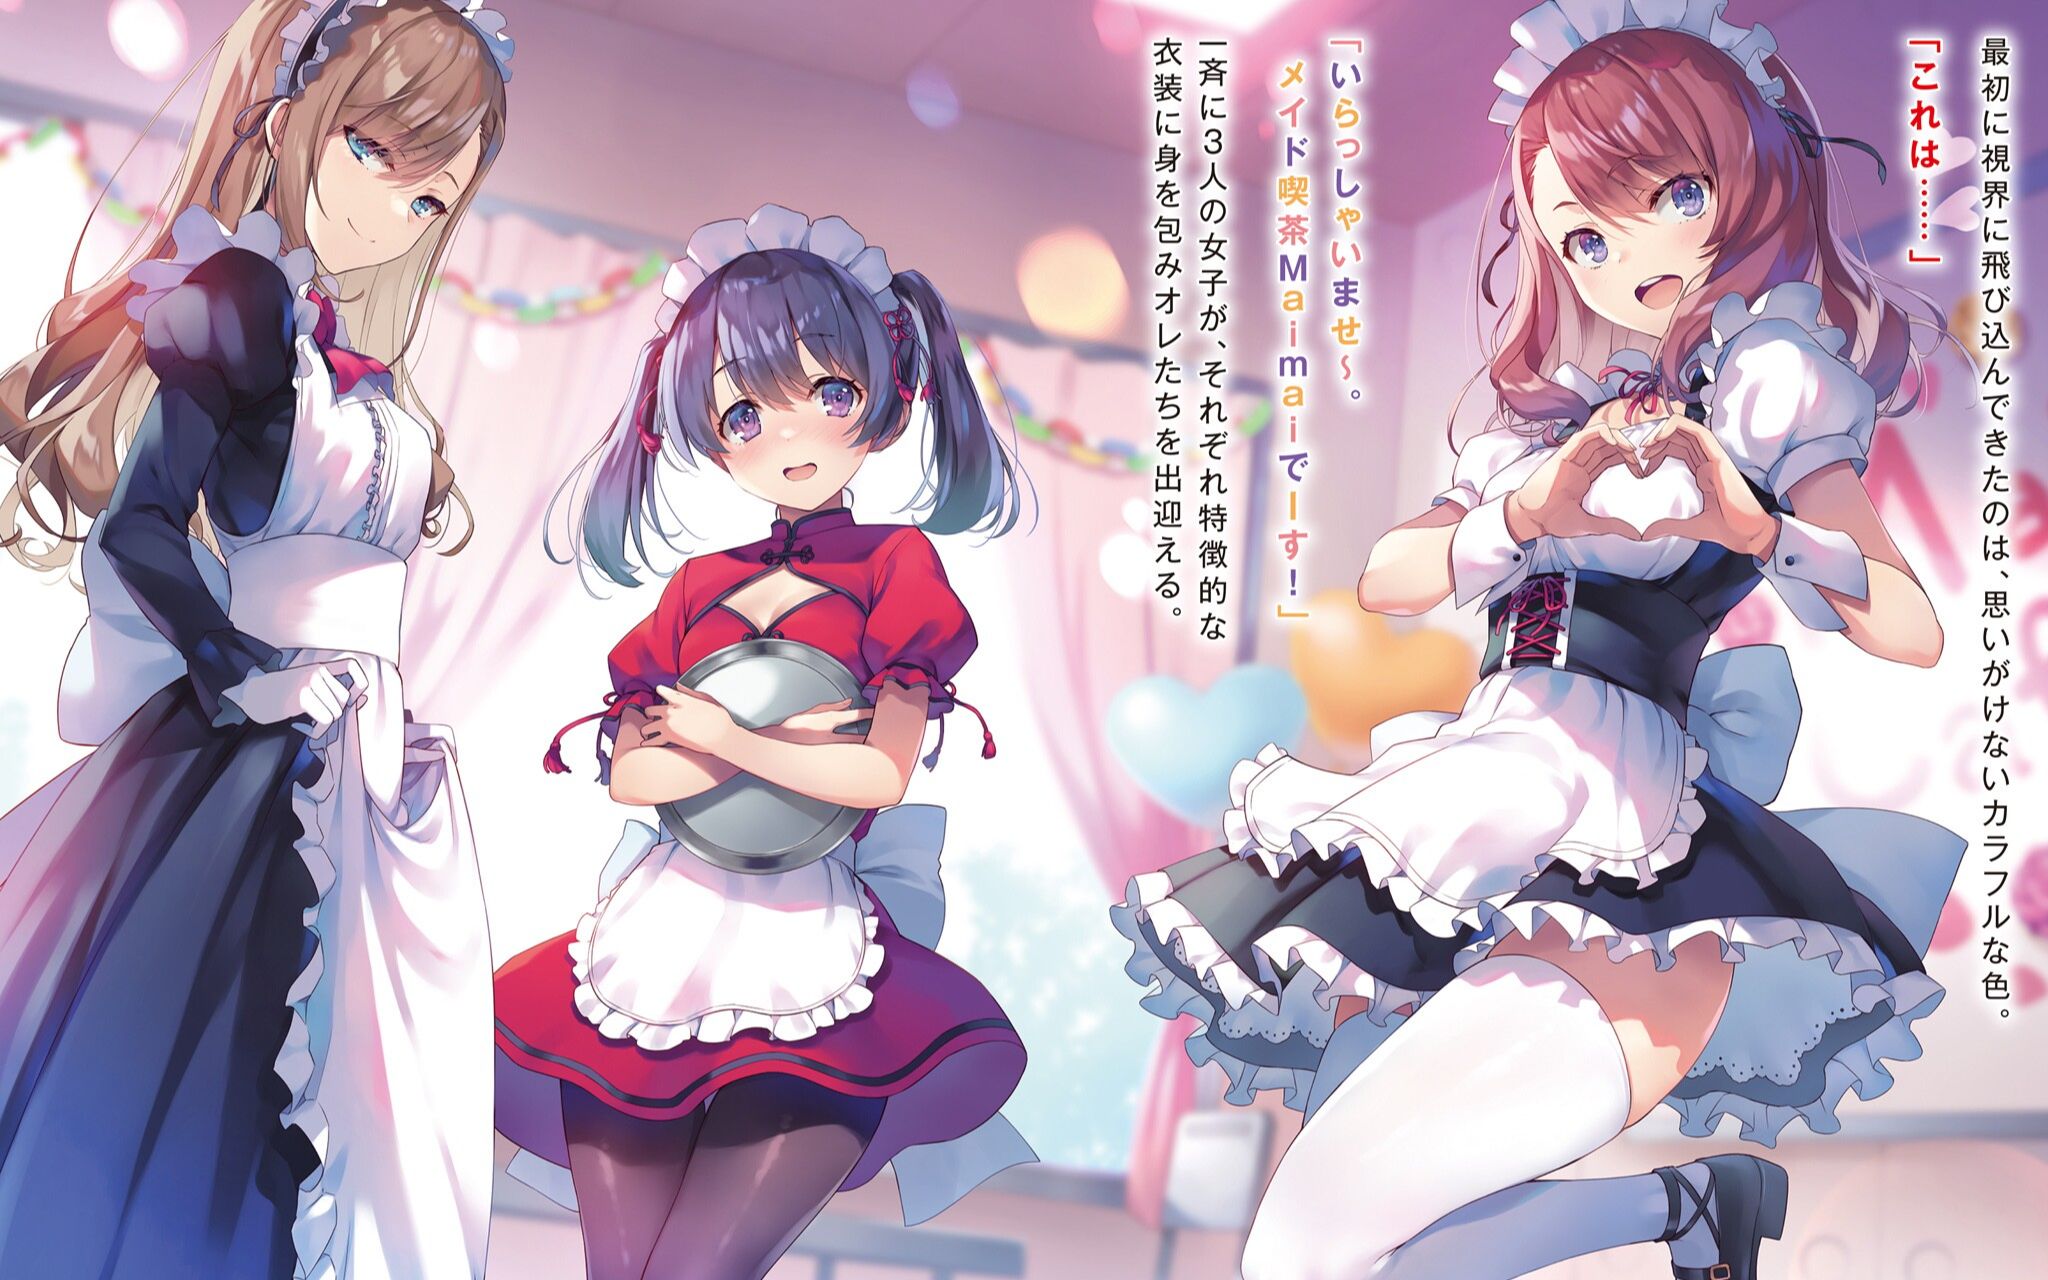 Anime 2048x1280 maid maid outfit Youkoso Jitsuryoku Shijou Shugi no Kyoushitsu e anime girls Japanese Japanese characters heart hands stockings